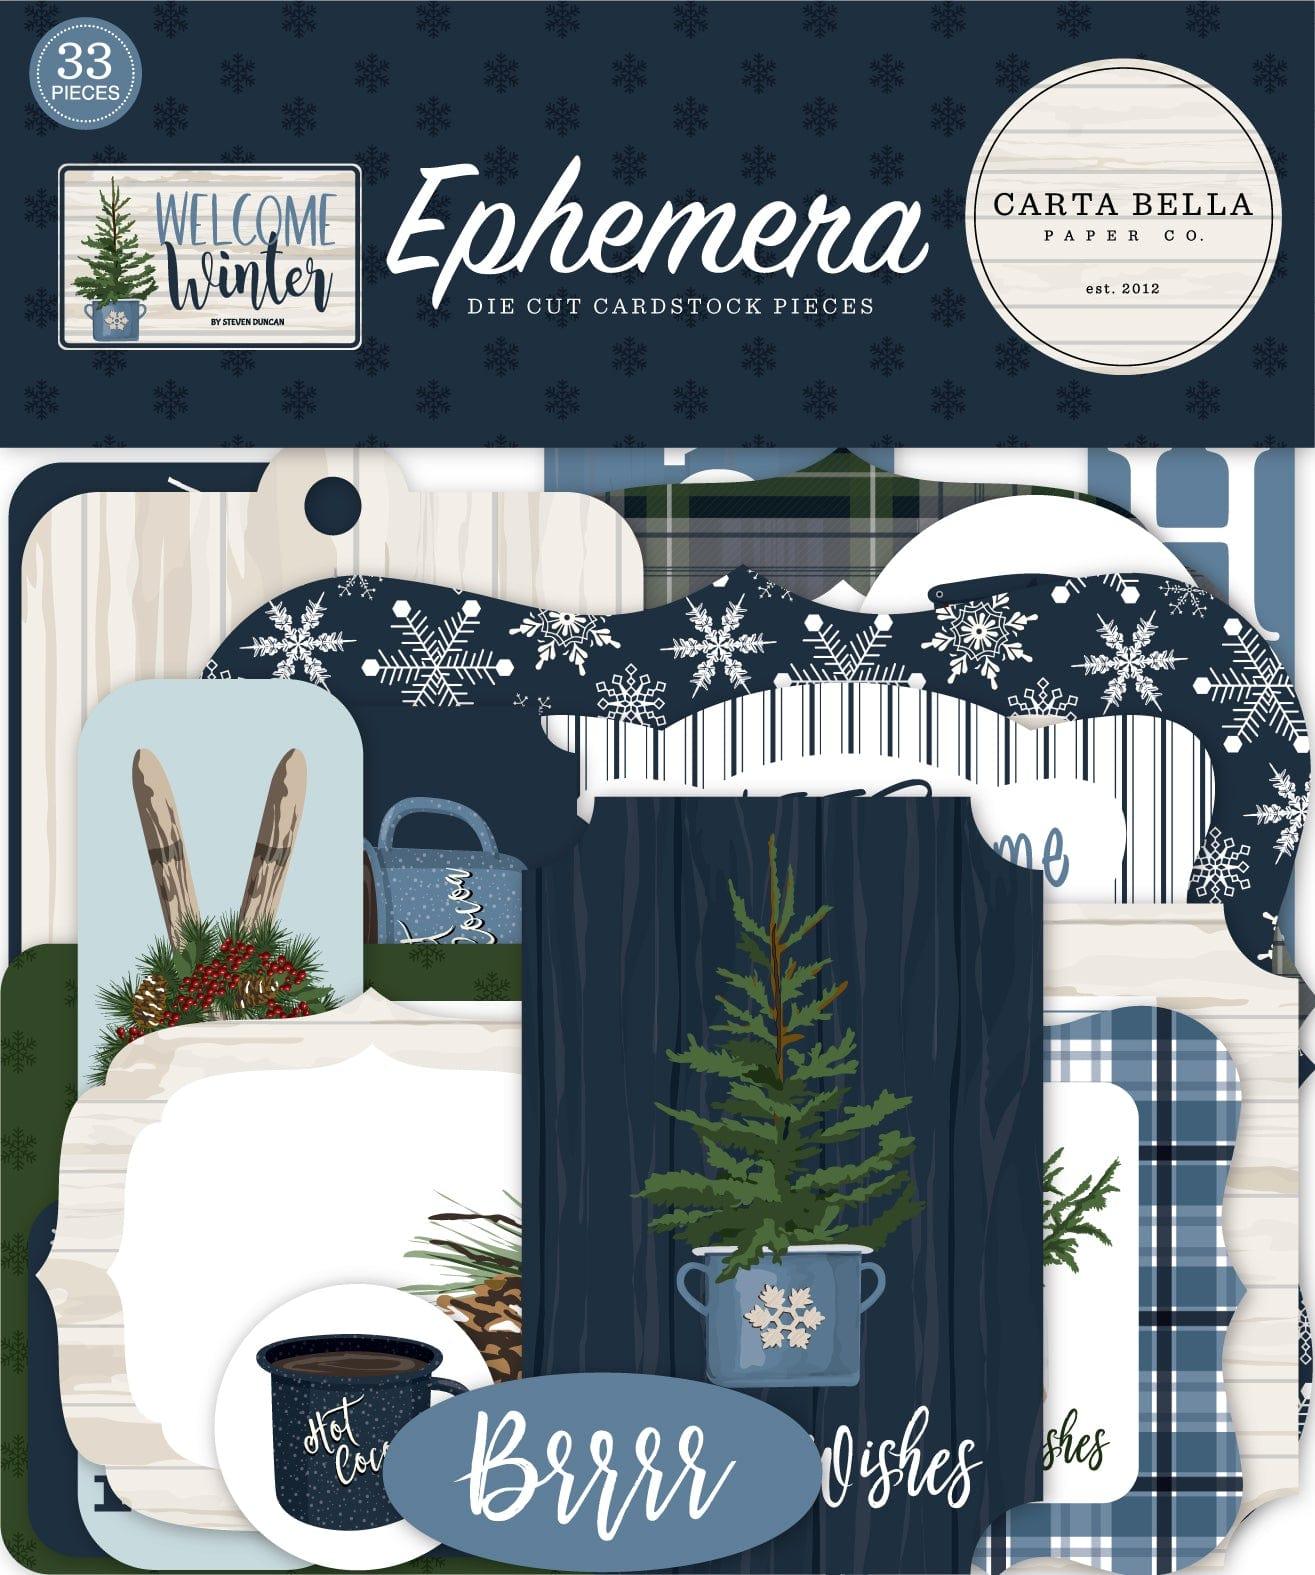 Welcome Winter Collection 5 x 5 Scrapbook Ephemera Die Cuts by Carta Bella - Scrapbook Supply Companies